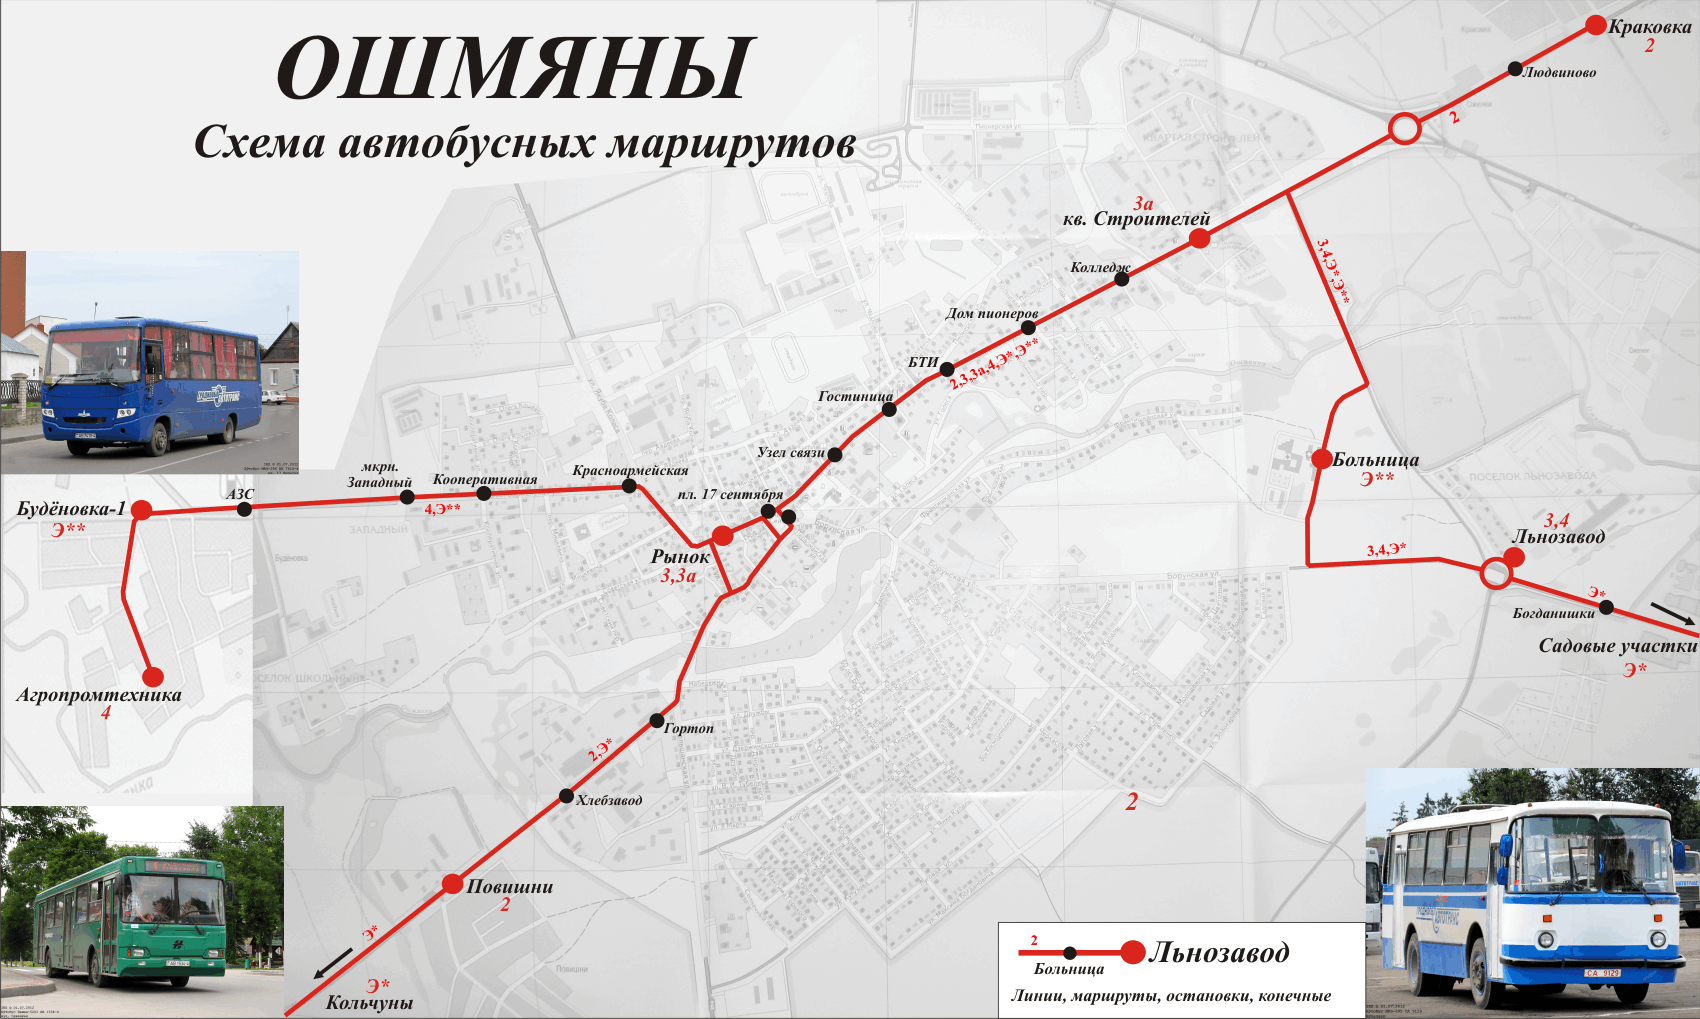 Oshmiany — Maps; Maps routes